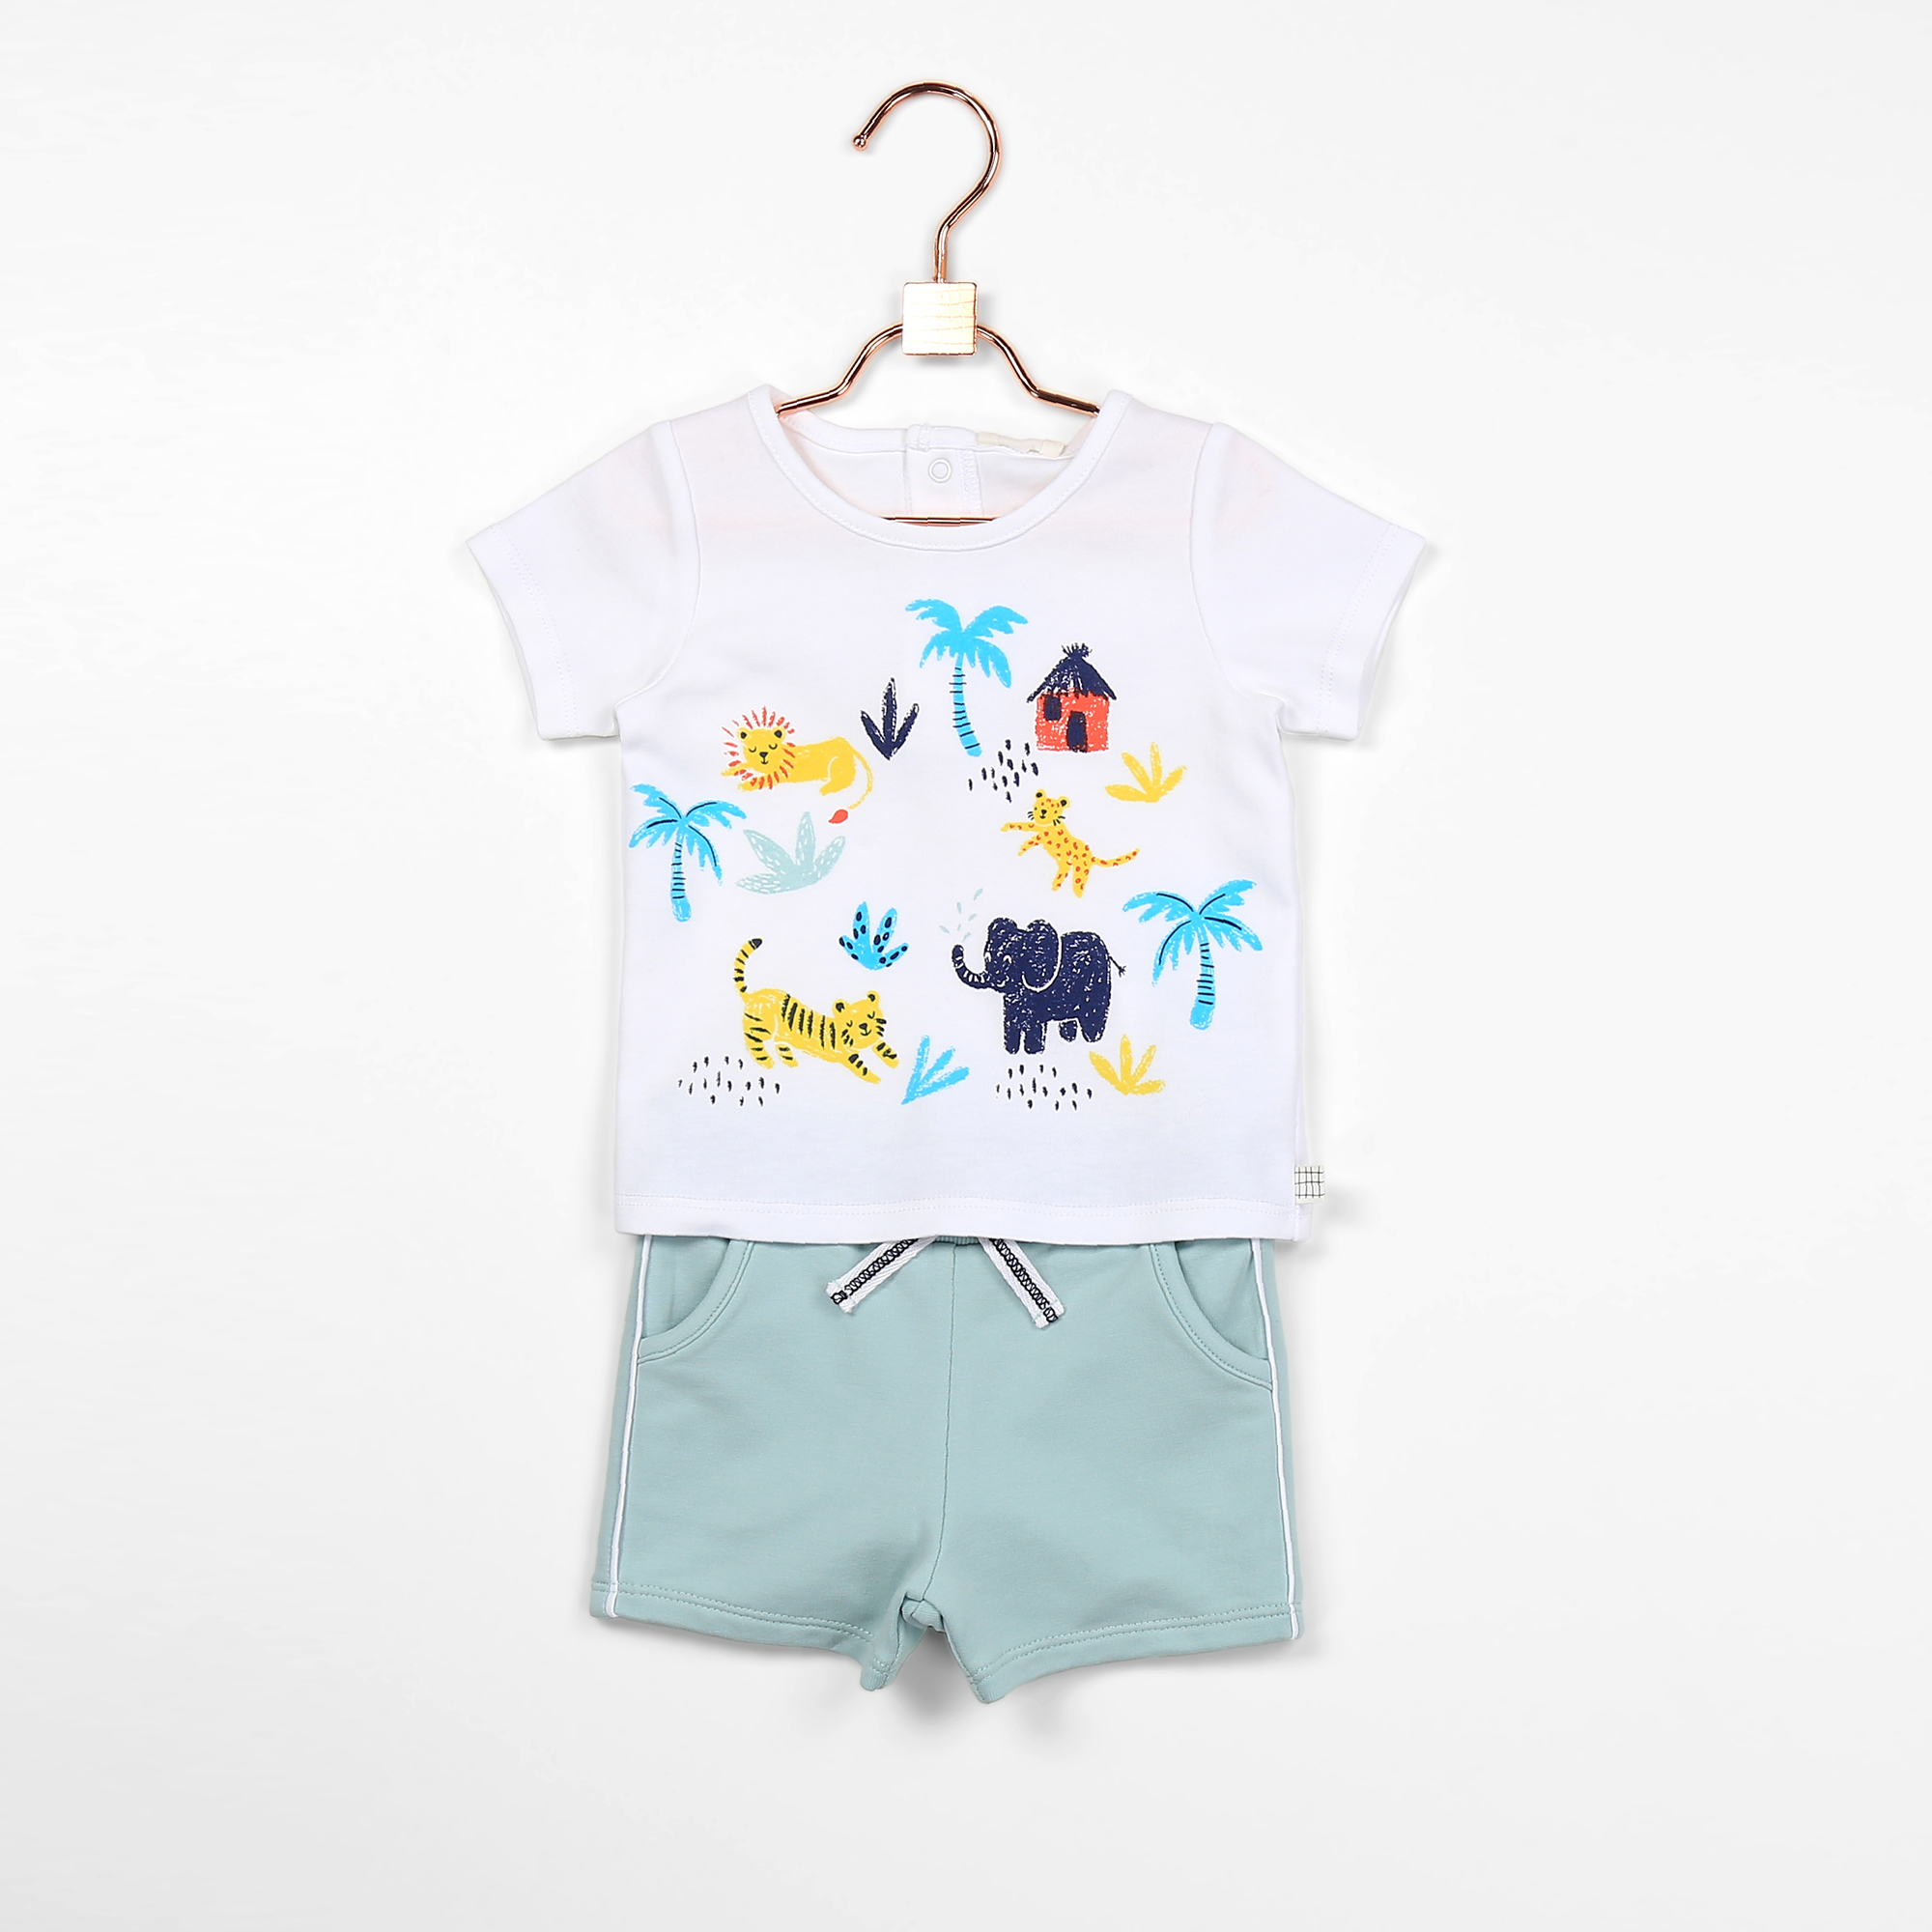 Cotton shorts and T-shirt set CARREMENT BEAU for BOY